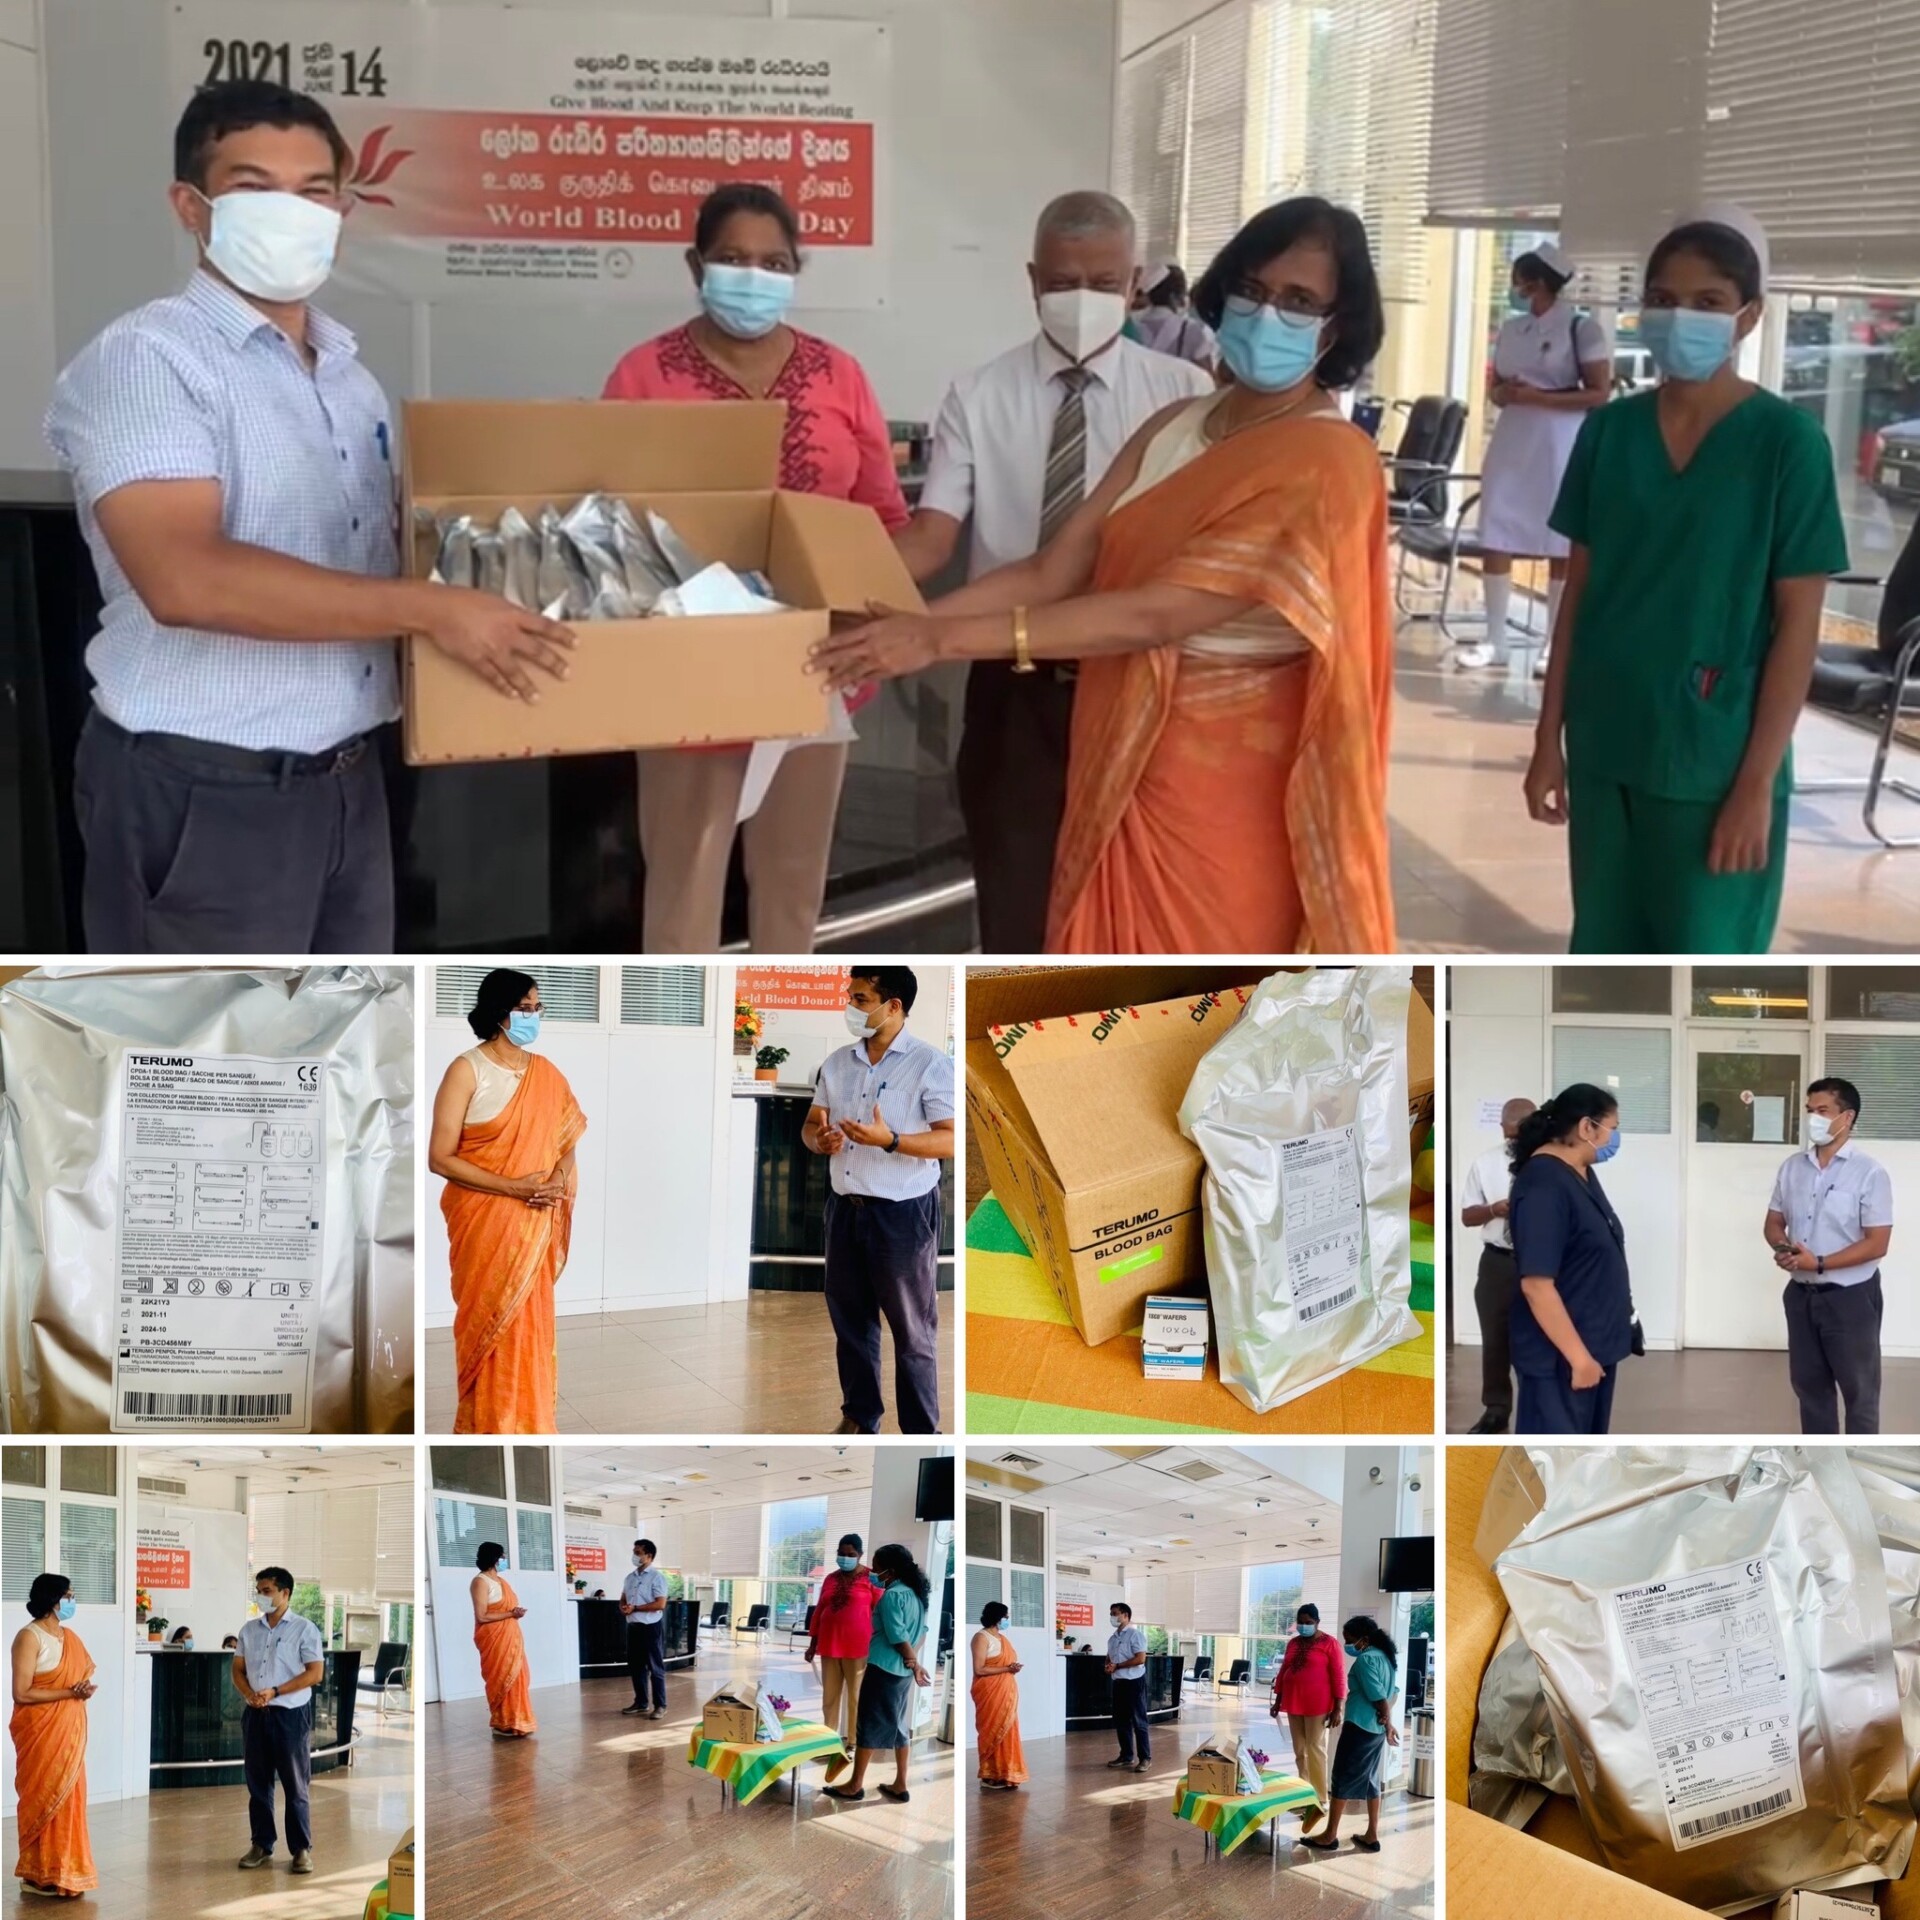 Sri lankan’s donate blood bags